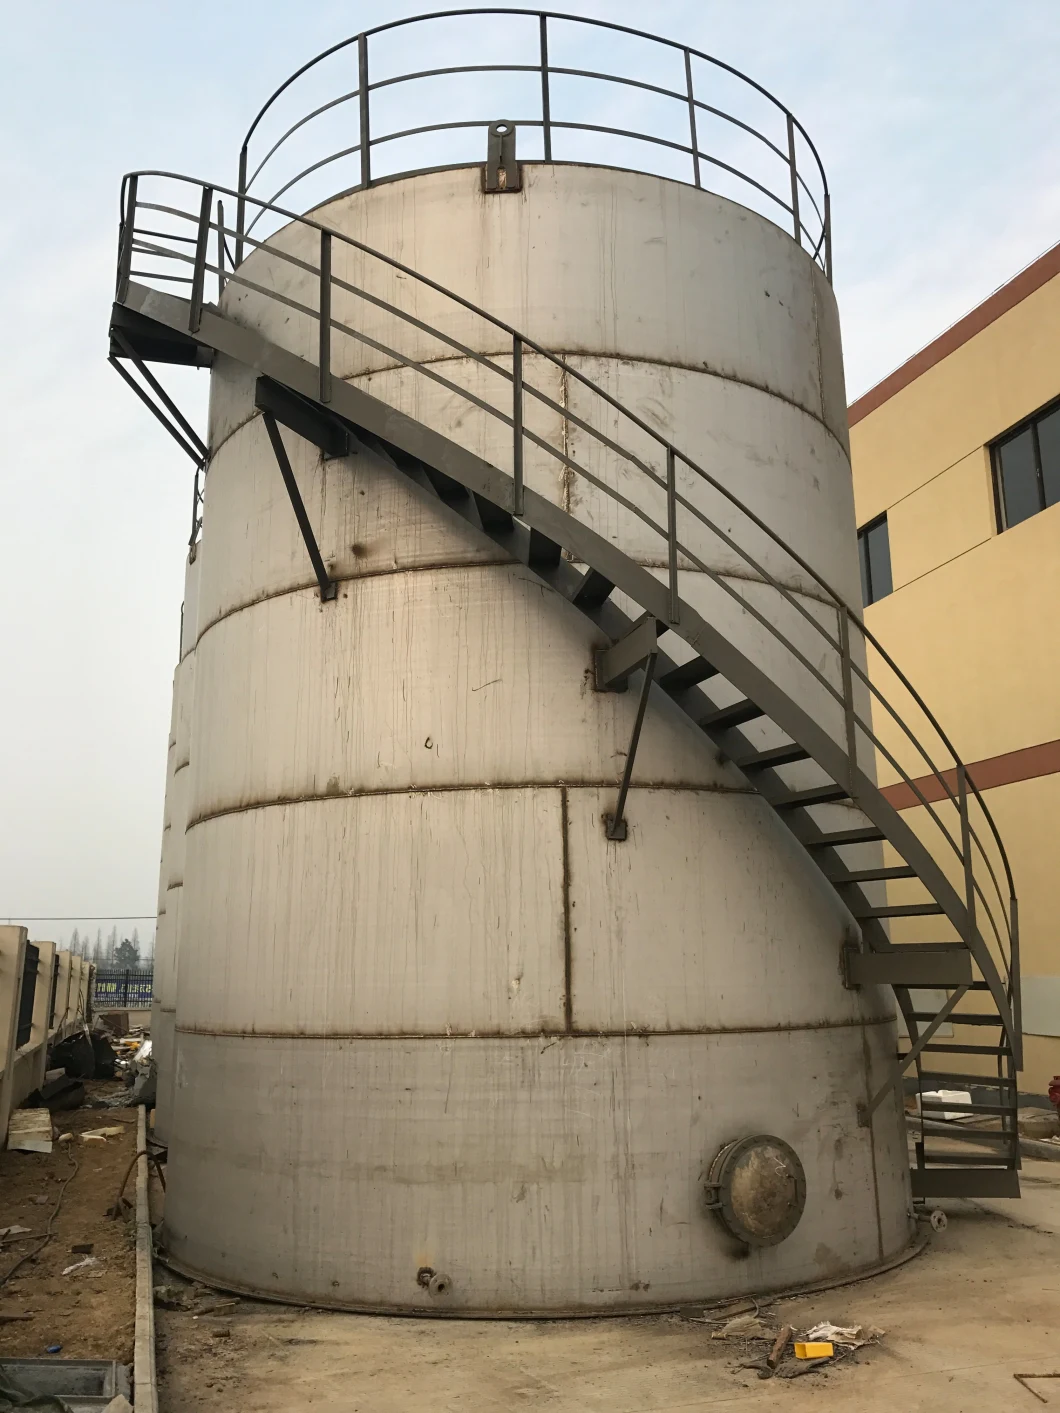 Chemical Storage Equipment Water Storage Tank FRP Storage Tank